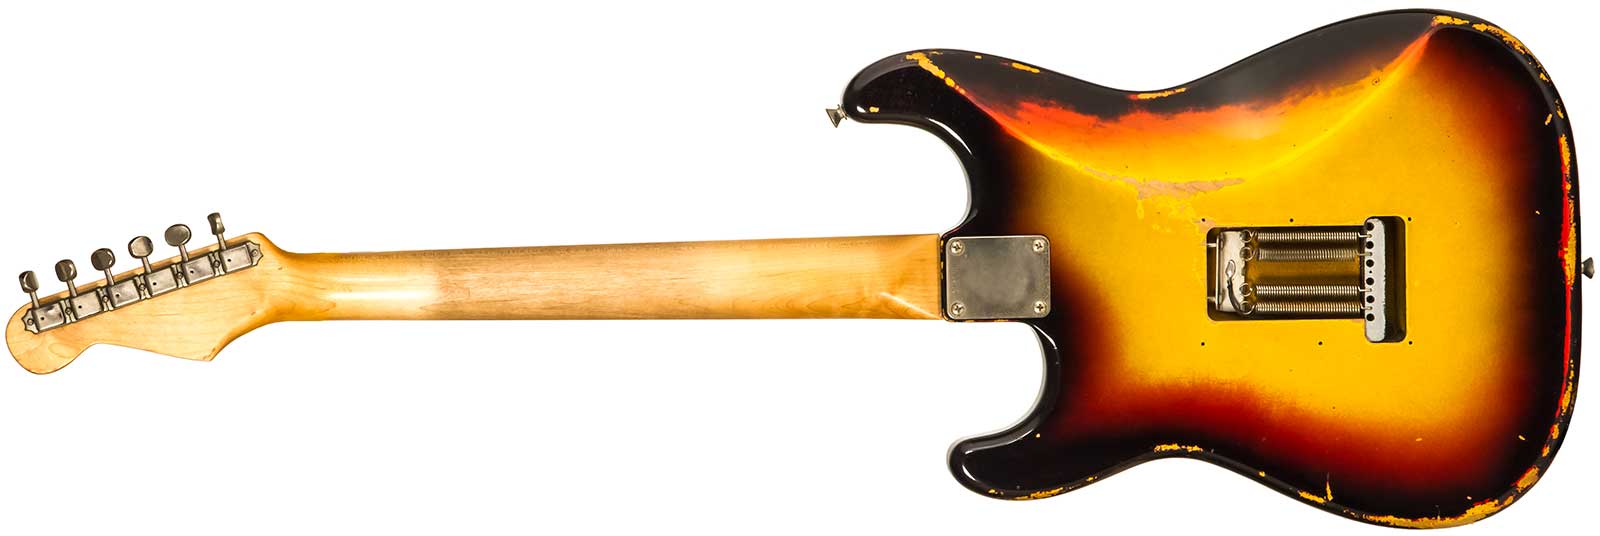 Rebelrelic S-series 1962 3s Trem Rw #231009 - 3-tone Sunburst - Guitarra eléctrica con forma de str. - Variation 1